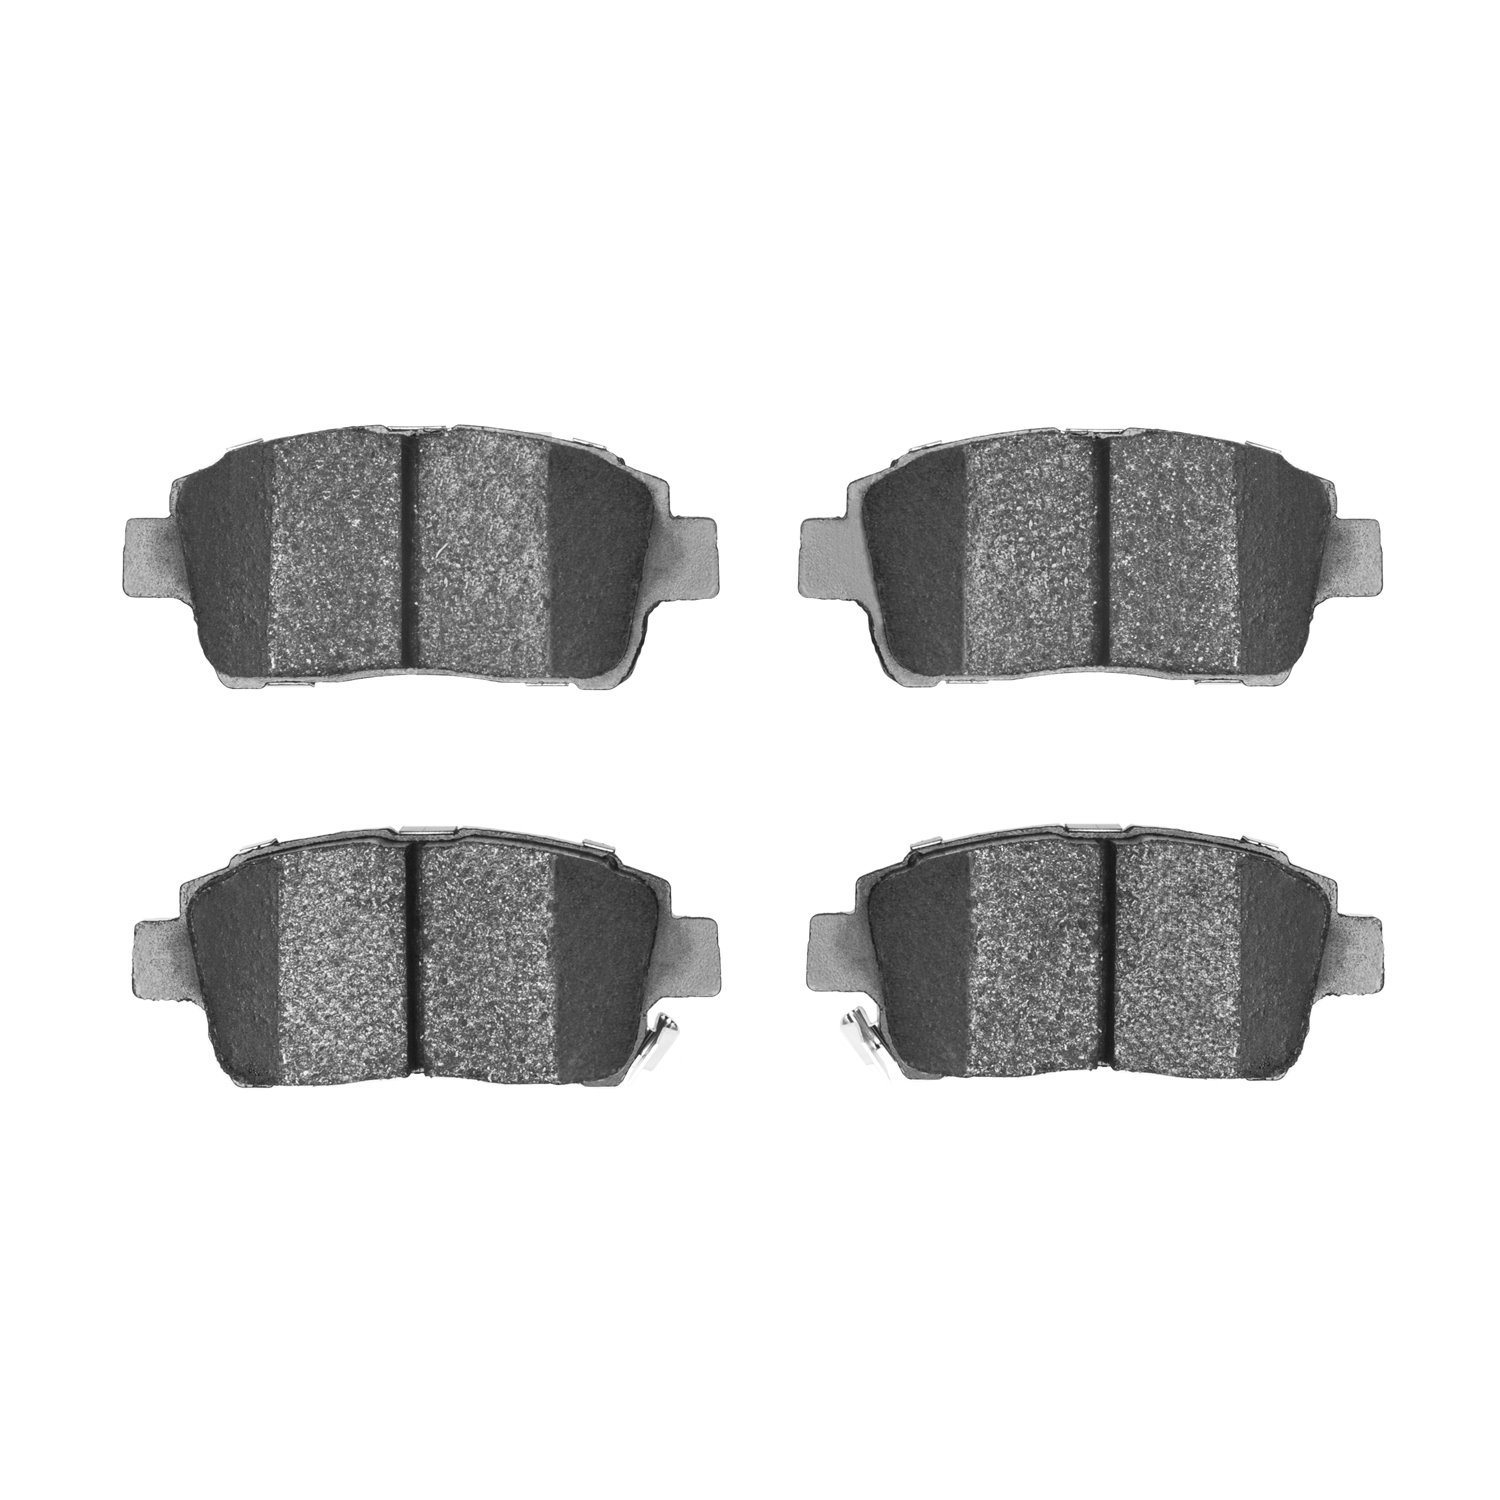 Track/Street Brake Pads, 2000-2015 Fits Multiple Makes/Models, Position: Front